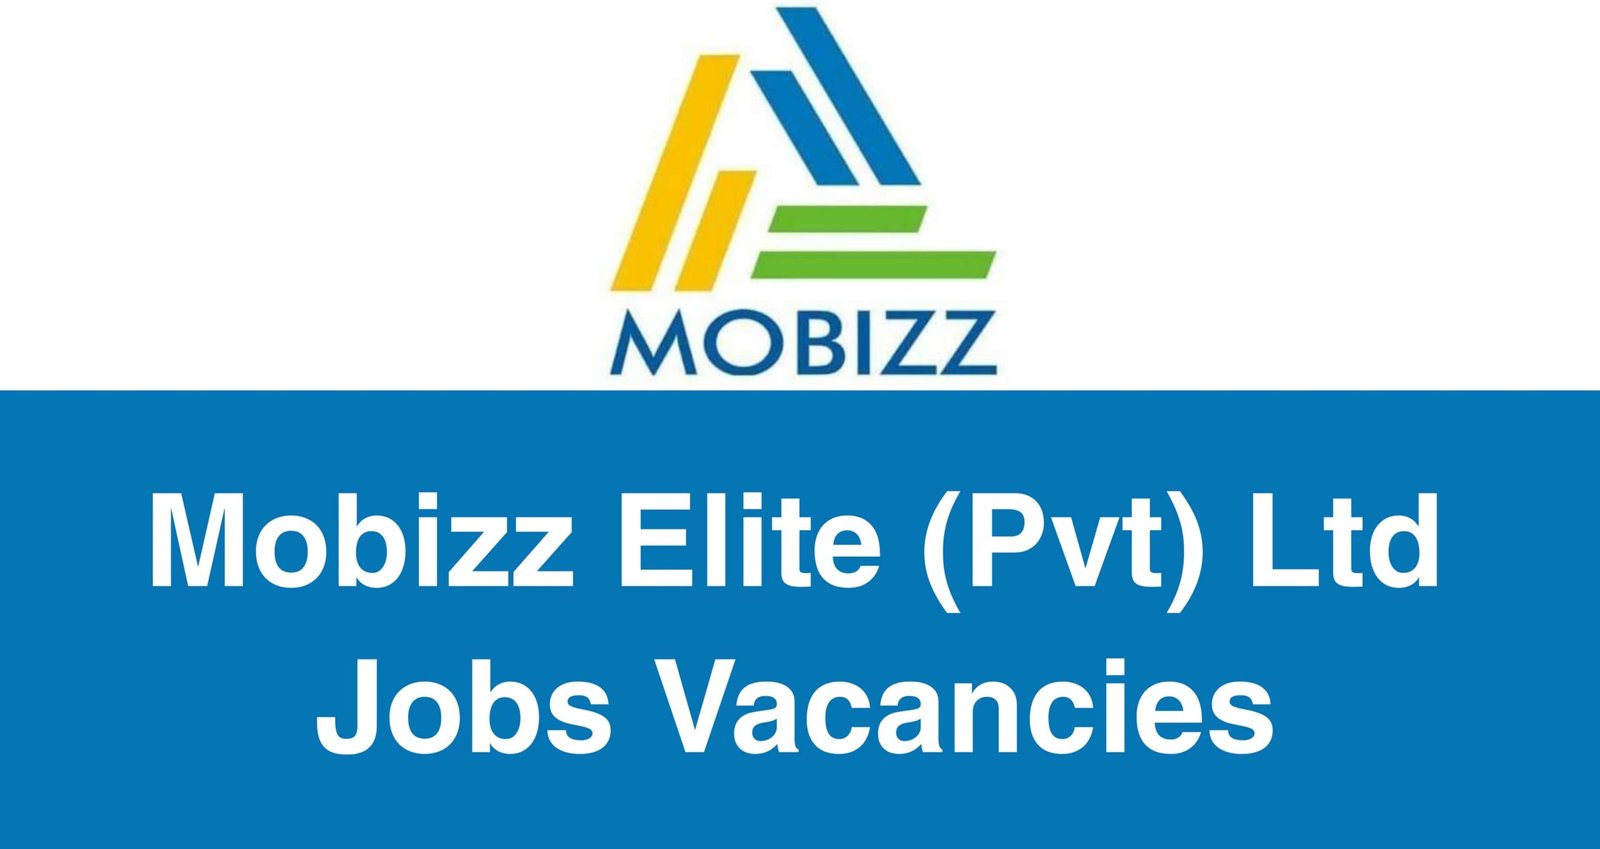 Mobizz Elite (Pvt) Ltd Jobs Vacancies